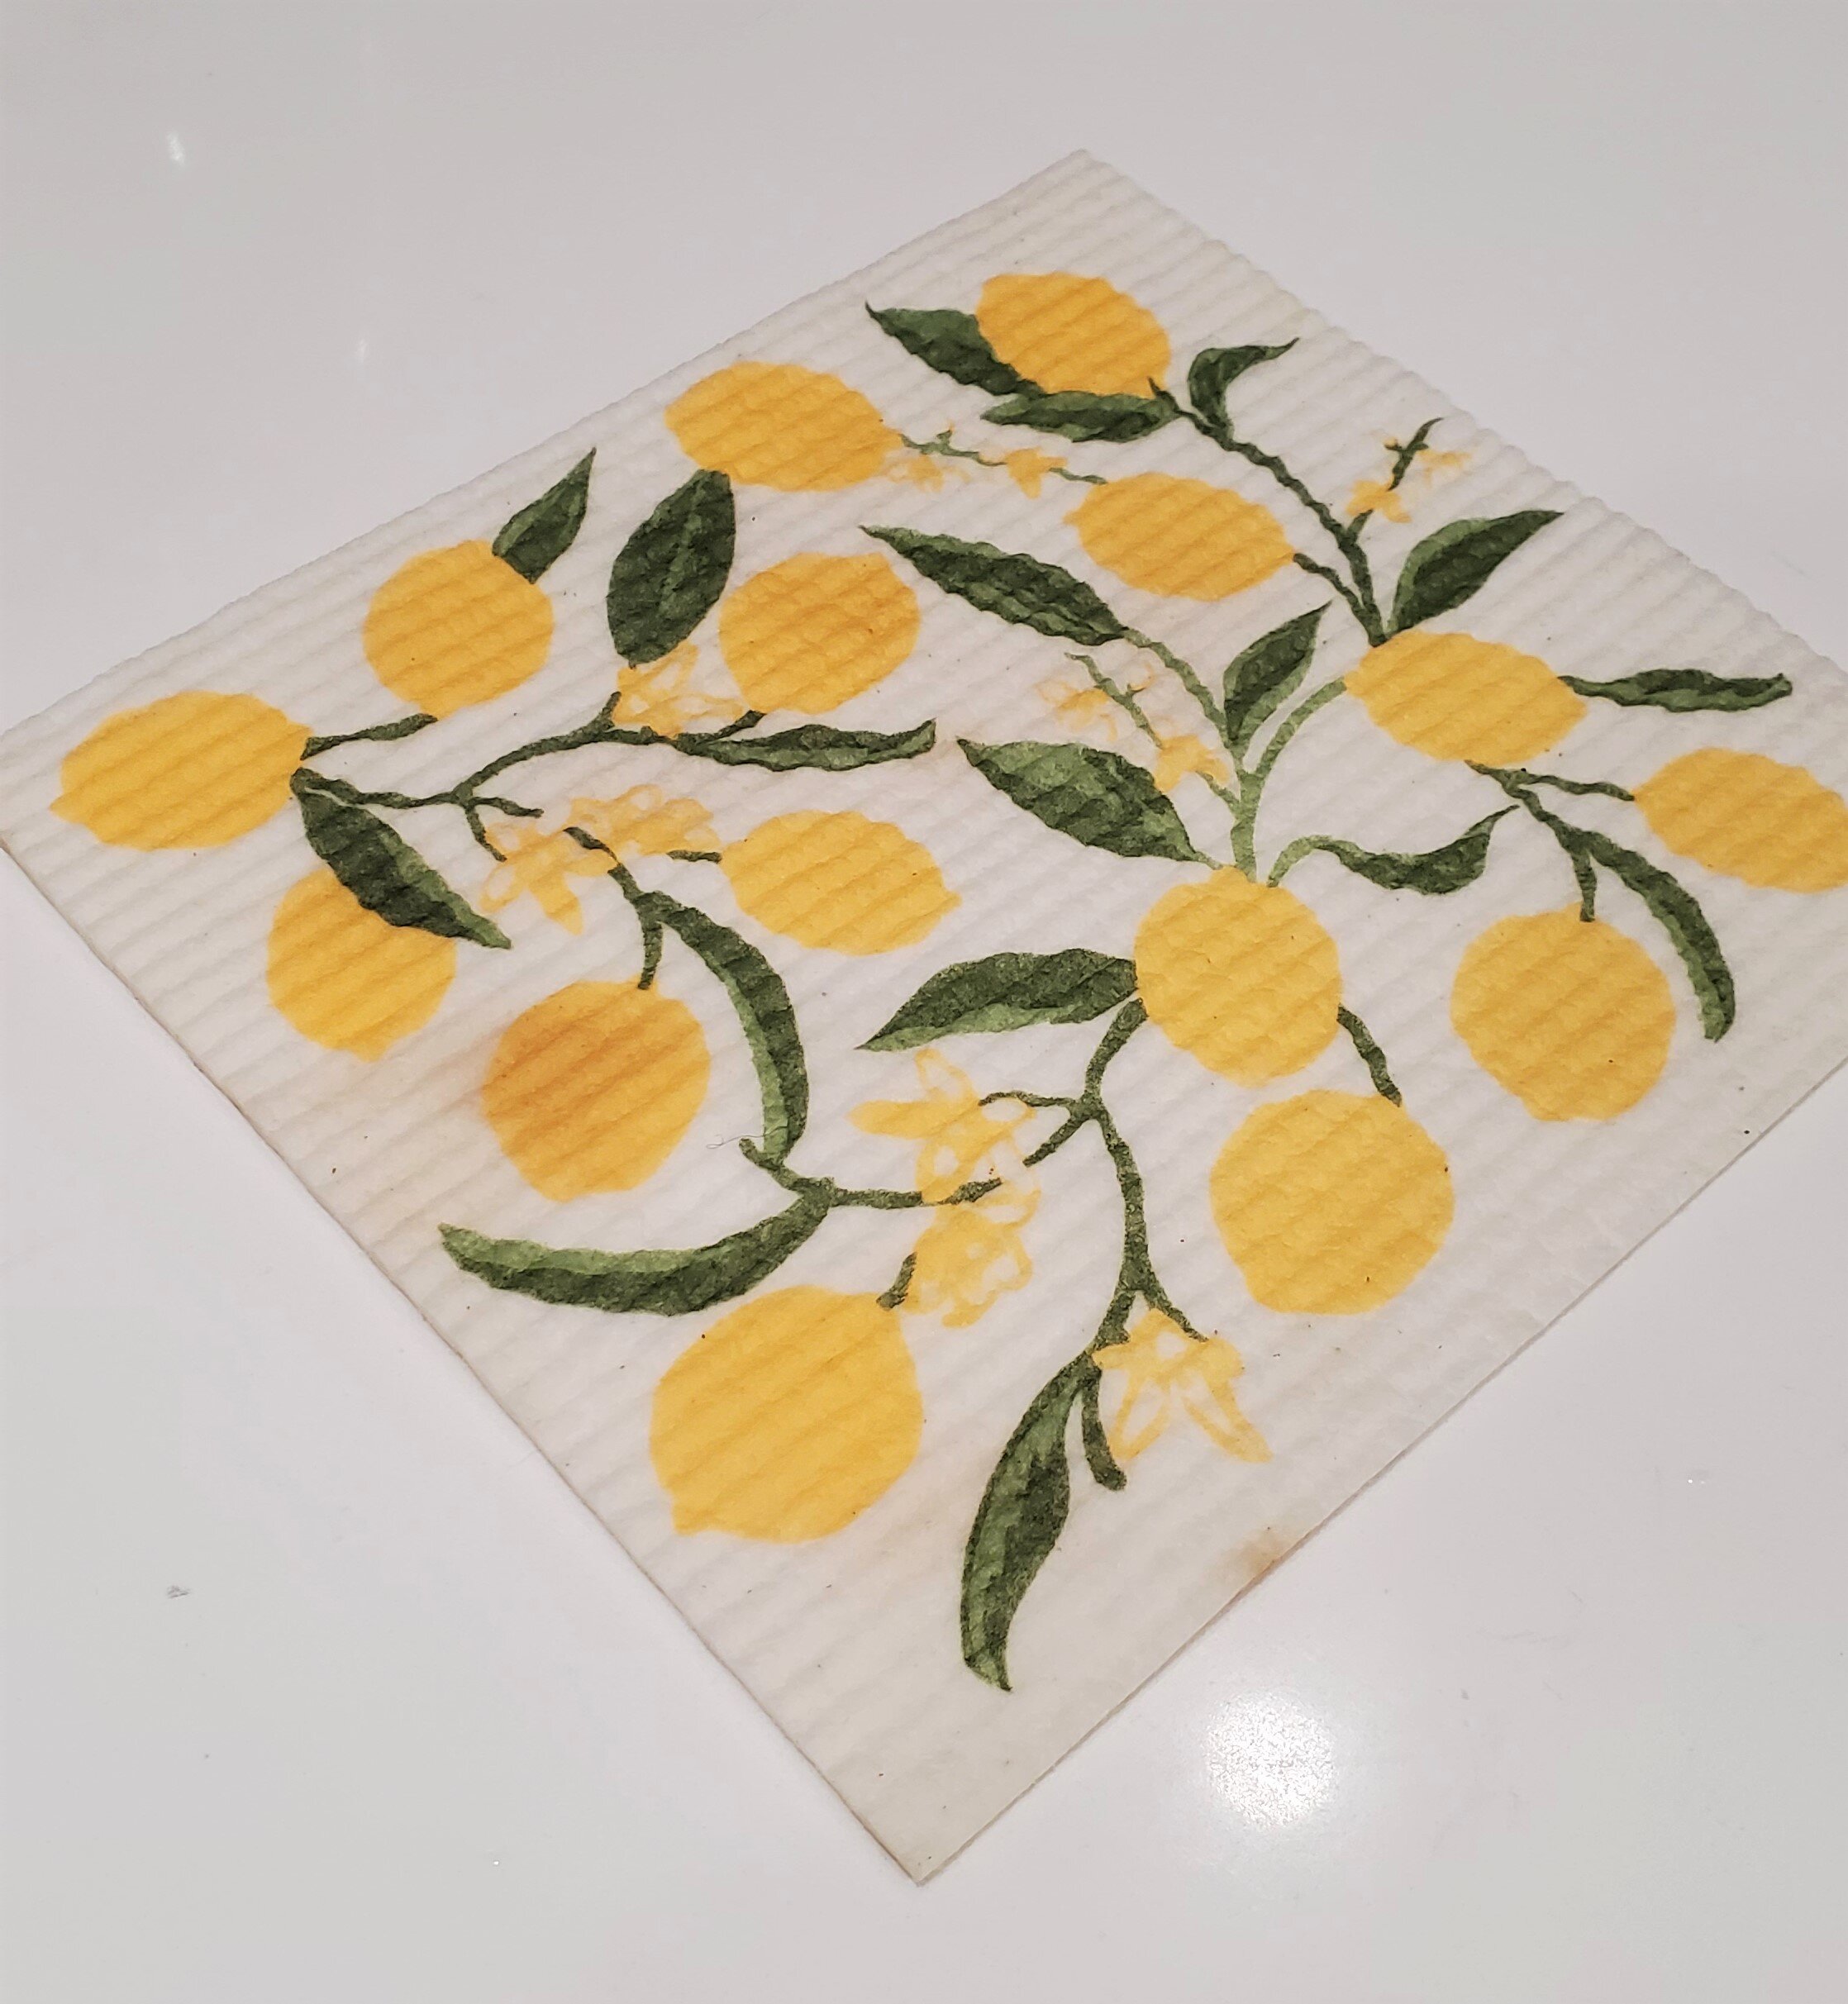 Swedish Dishcloth (Lemon Lime) Single Paper Towel Replacement